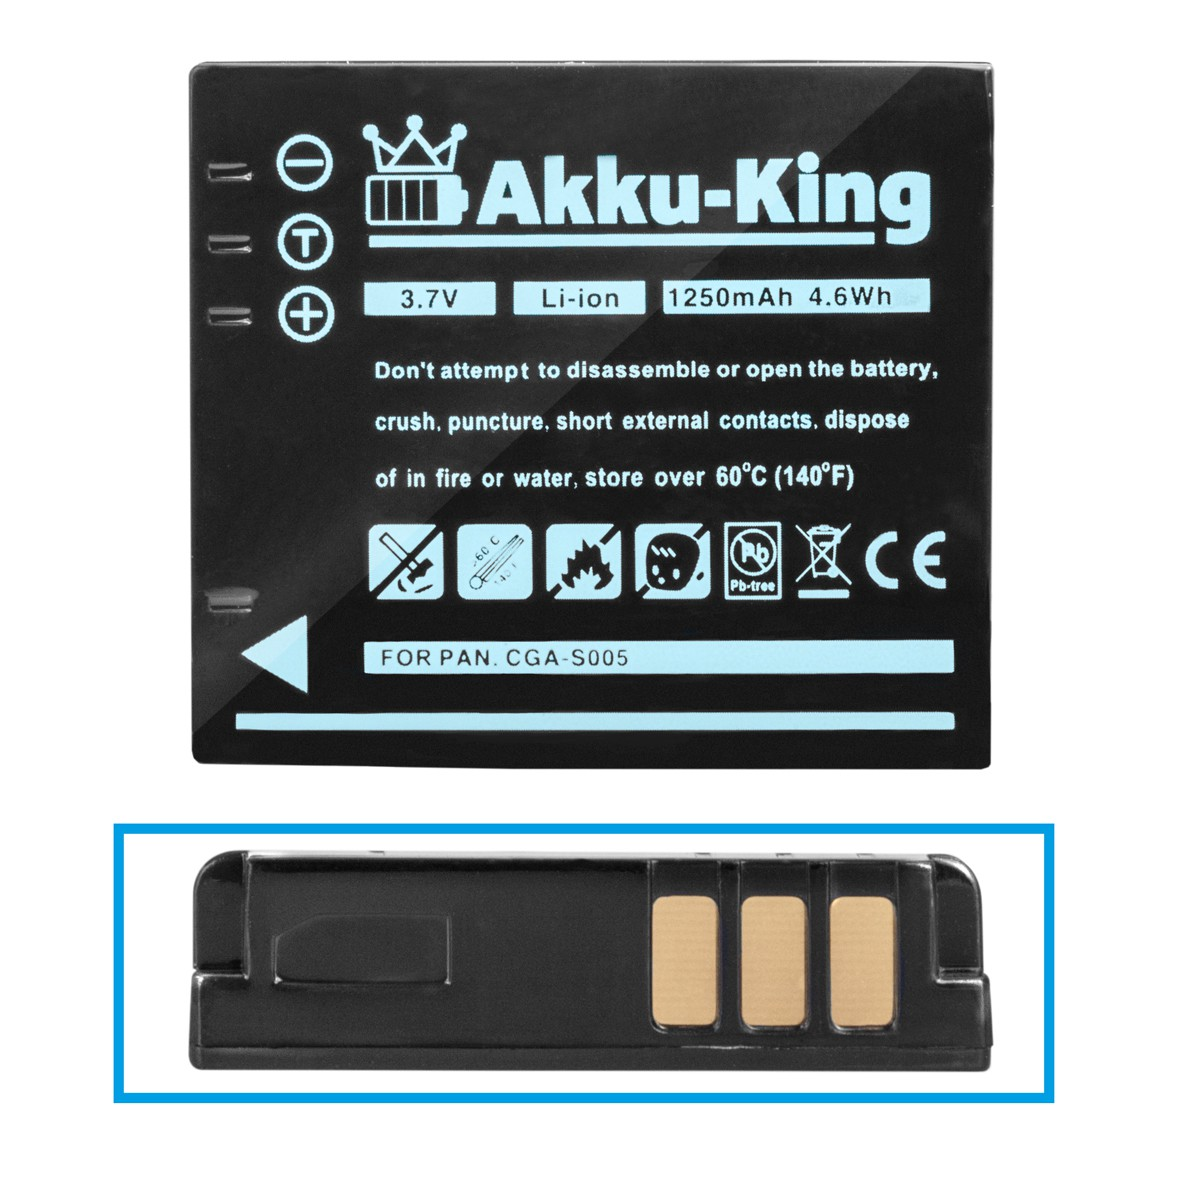 AKKU-KING 3.7 BP-DC4 Volt, Leica Akku 1250mAh Li-Ion Kamera-Akku, kompatibel mit